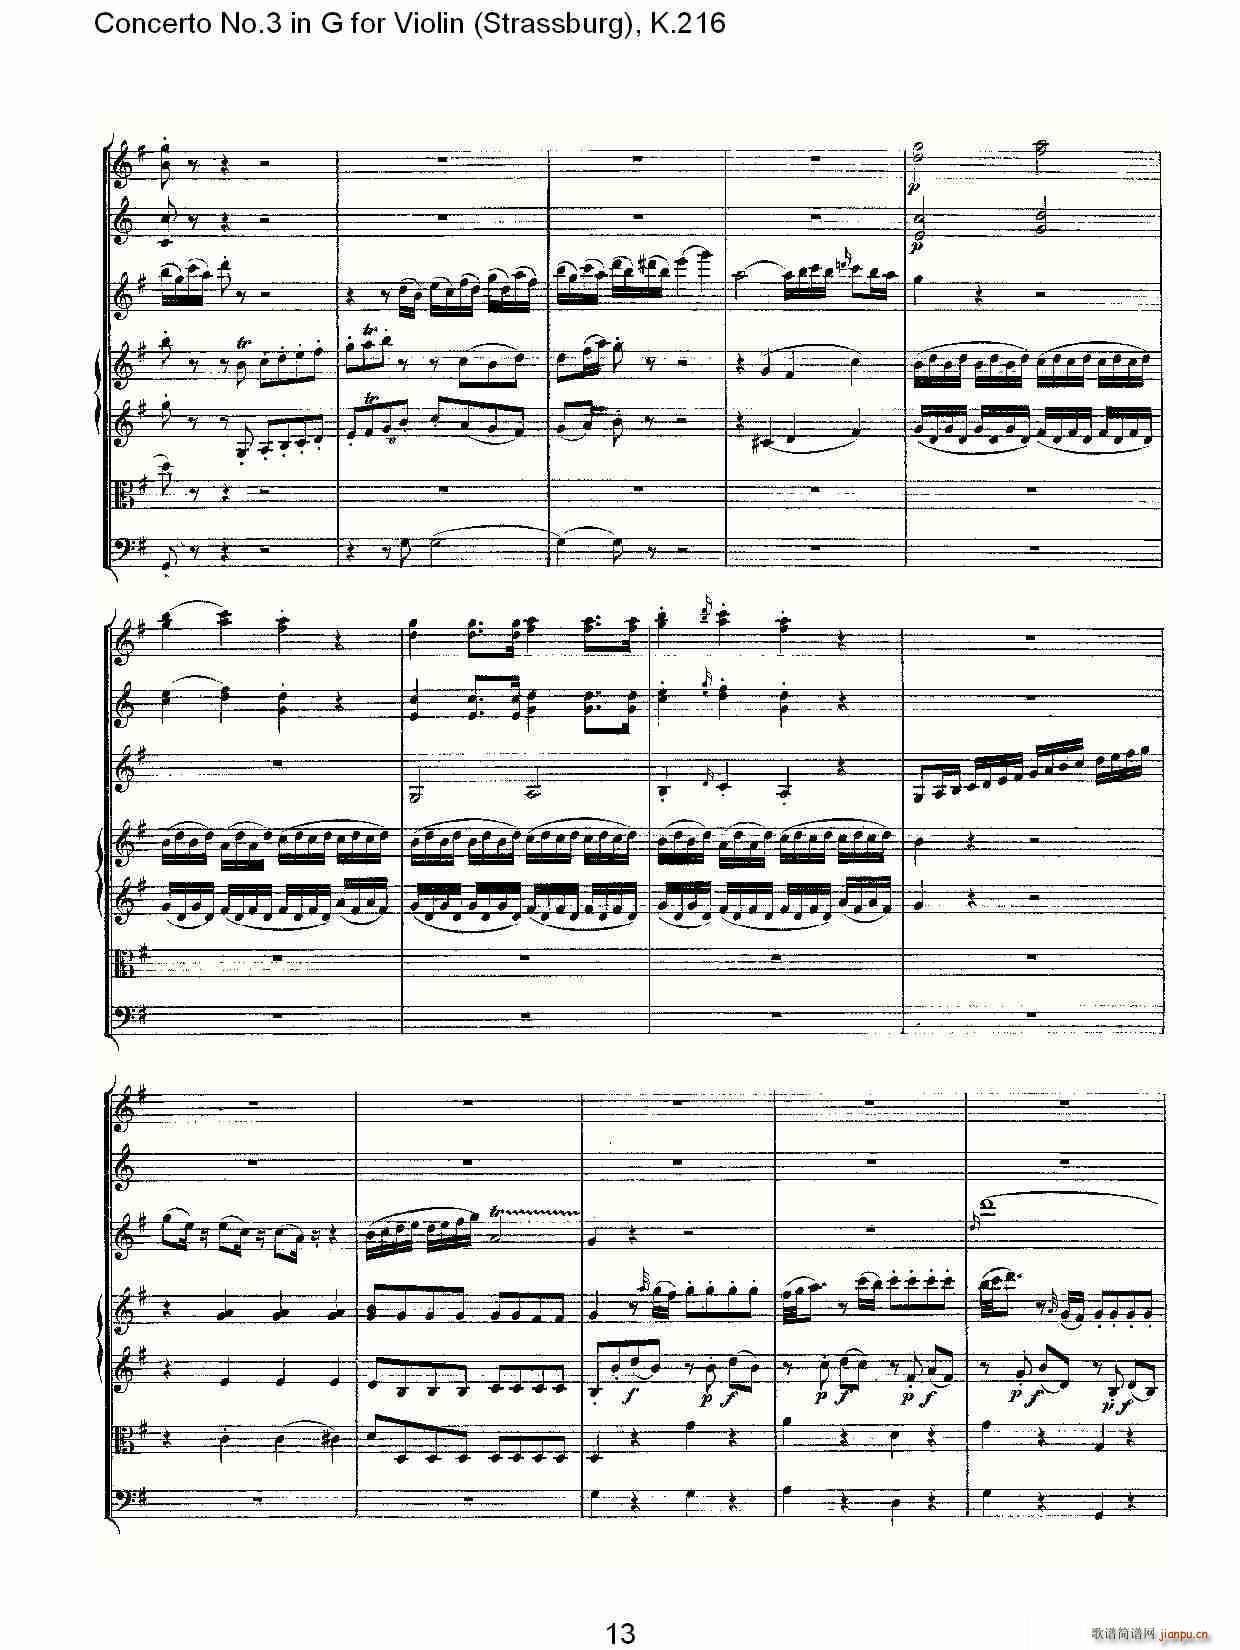 Concerto No.3 in G for Violin K.216(С)13